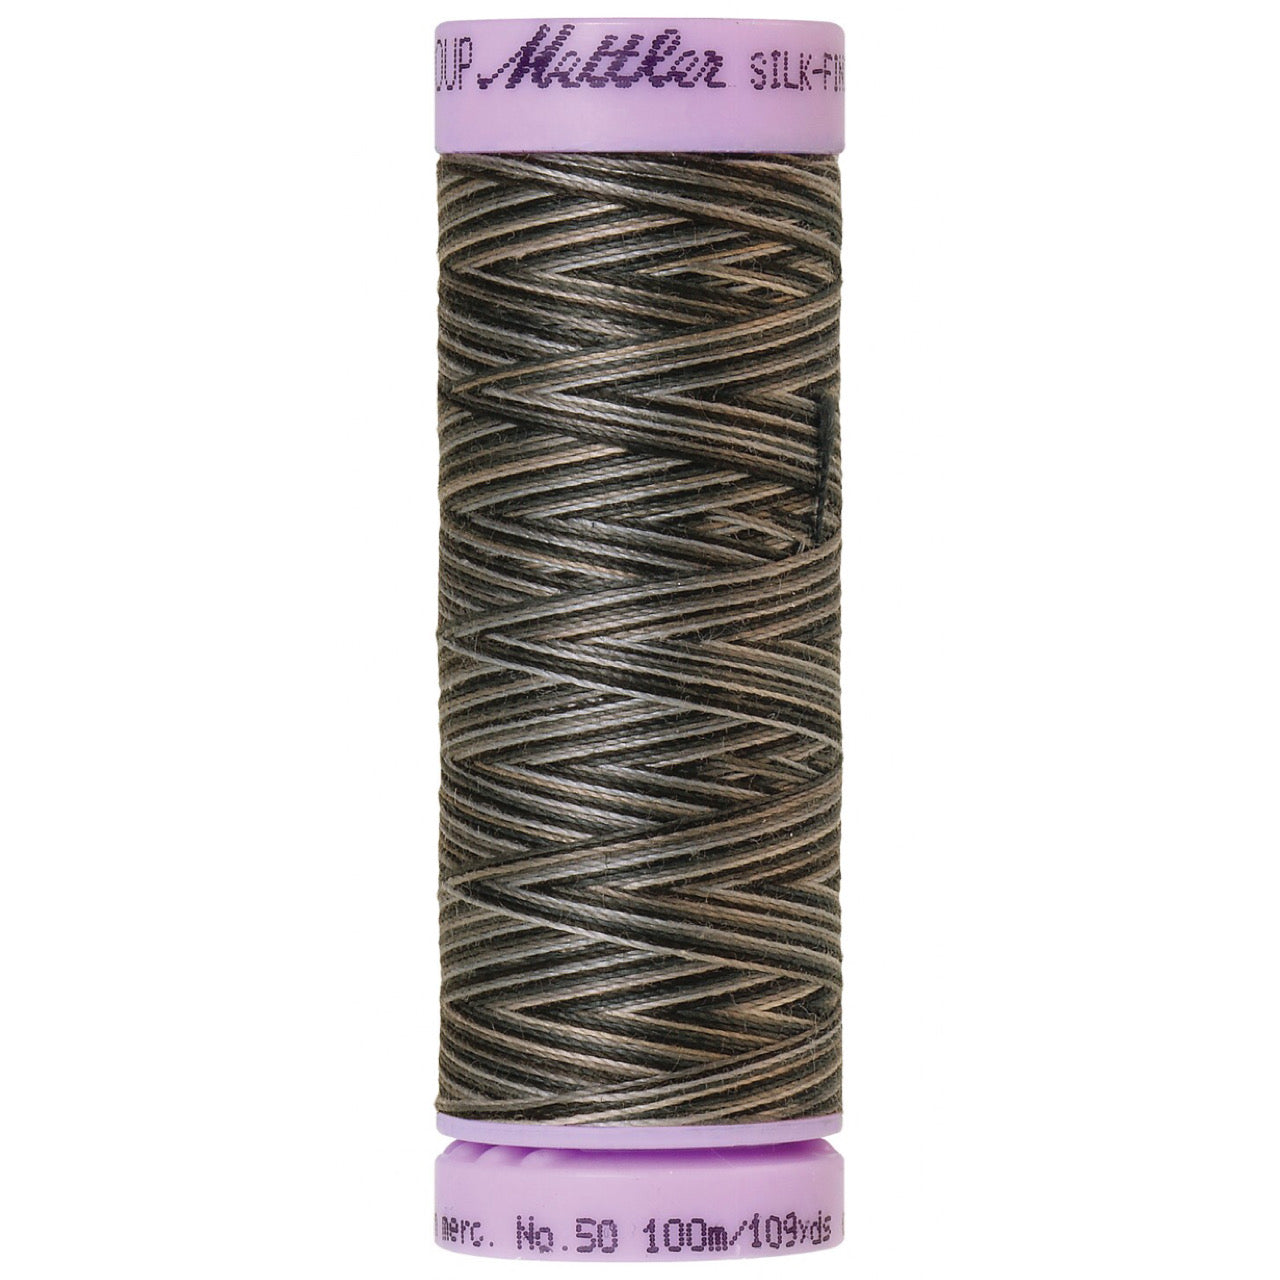 Mettler Cotton 50wt Thread - 150mt - Variegated 9861